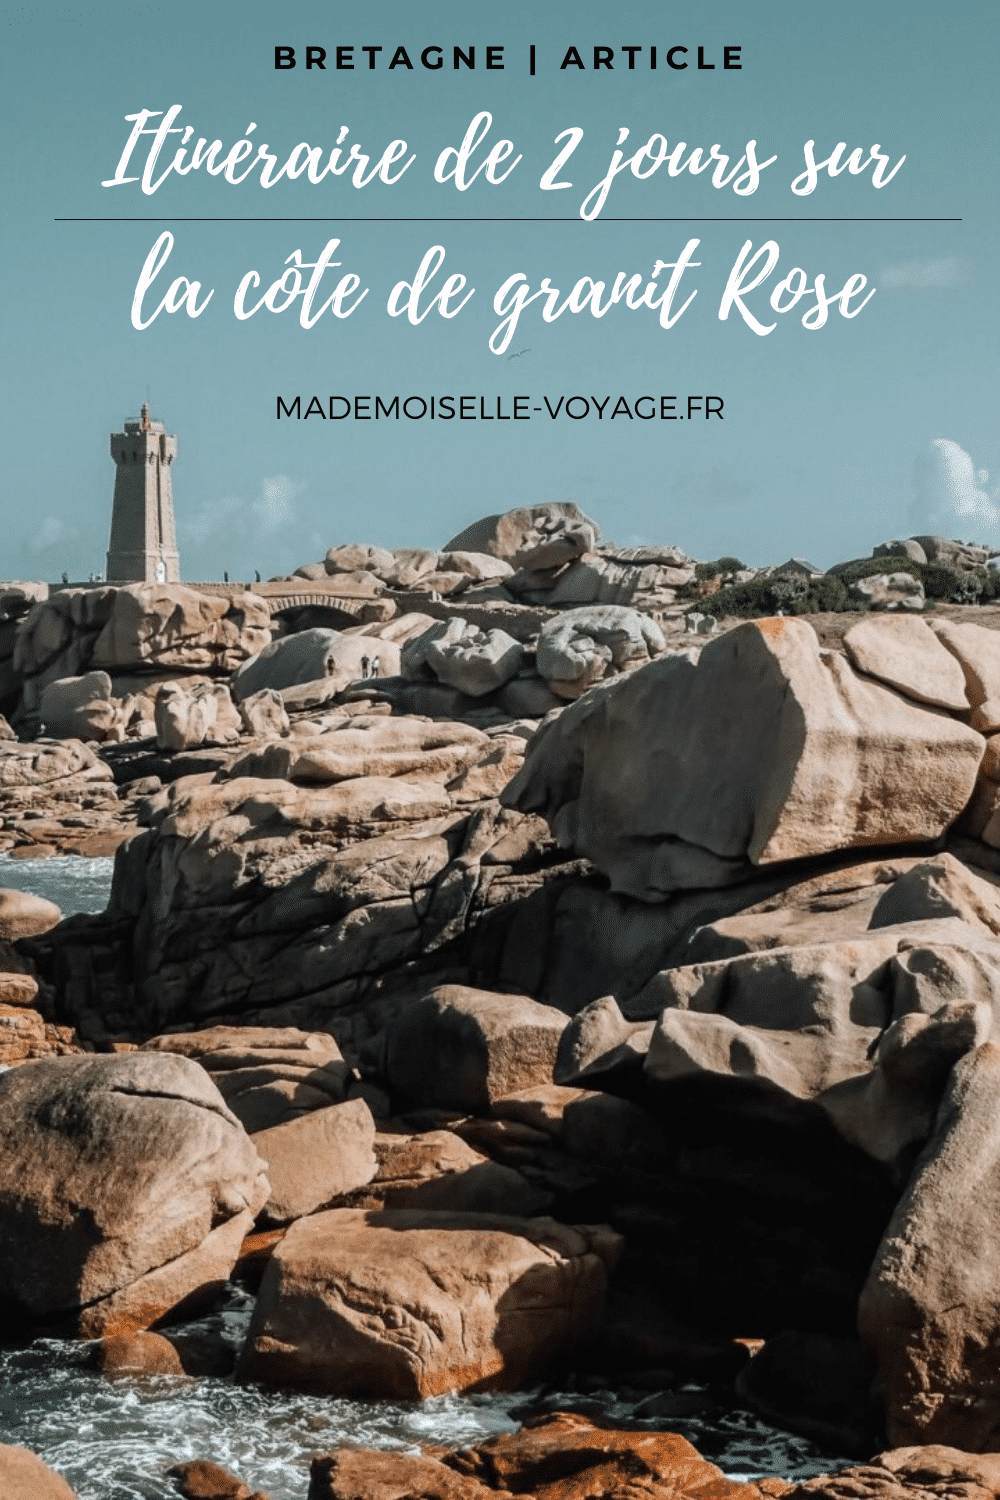 Bretagne | Cote de granit rose | Ploumanac'h | Perros-guirec | tregastel | conseils | mademoiselle-voyage| lannion | Blog voyage